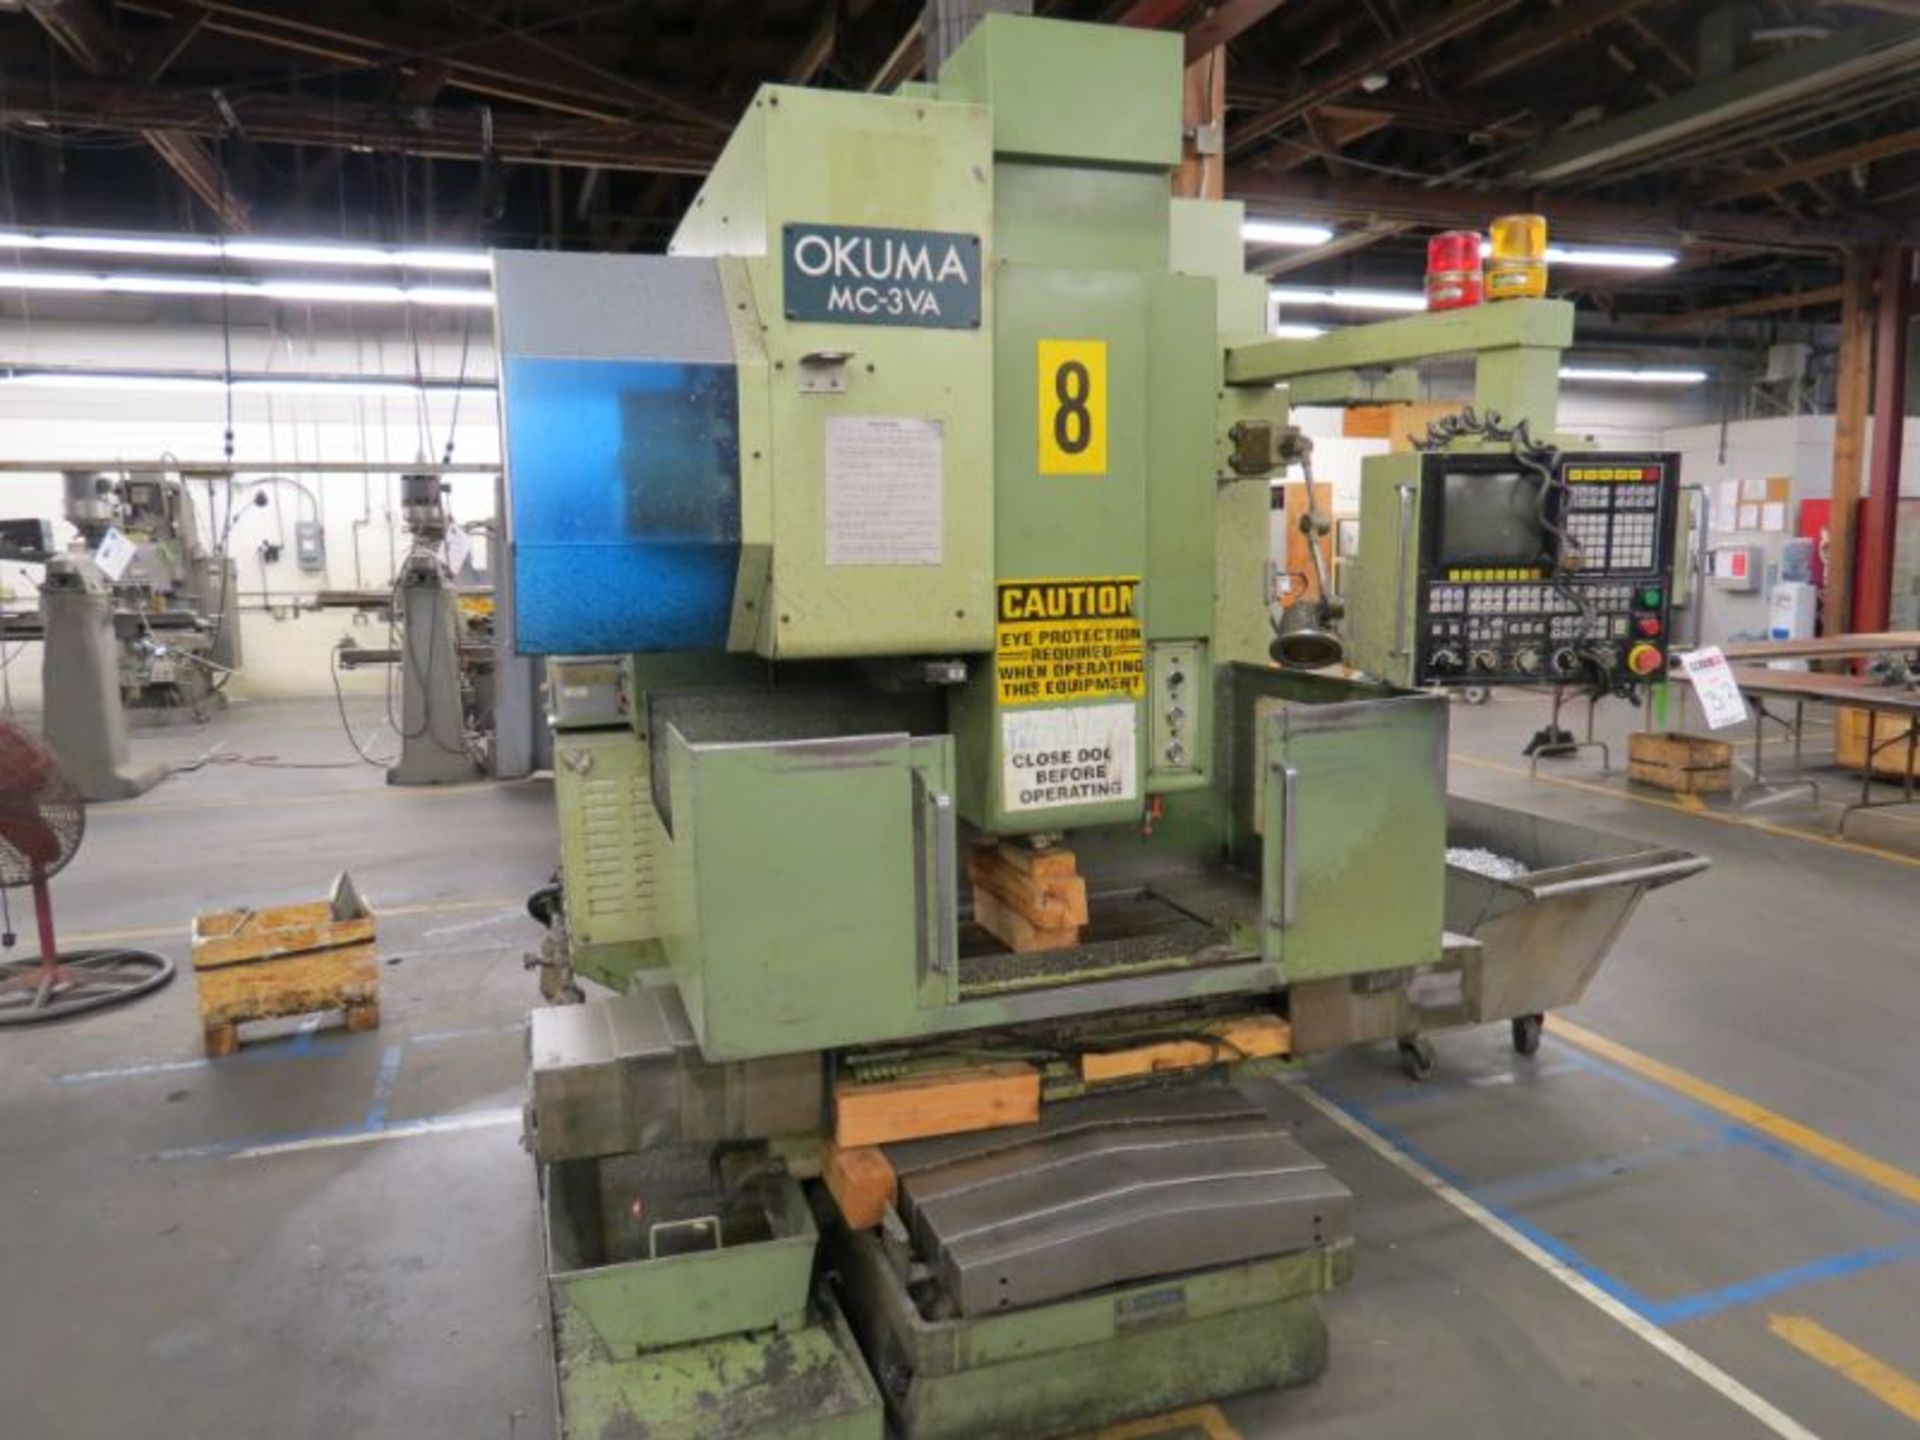 Okuma MC-3 VA Vertical CNC Milling Machine, s/n 68 (Not Under Power) - Image 3 of 6